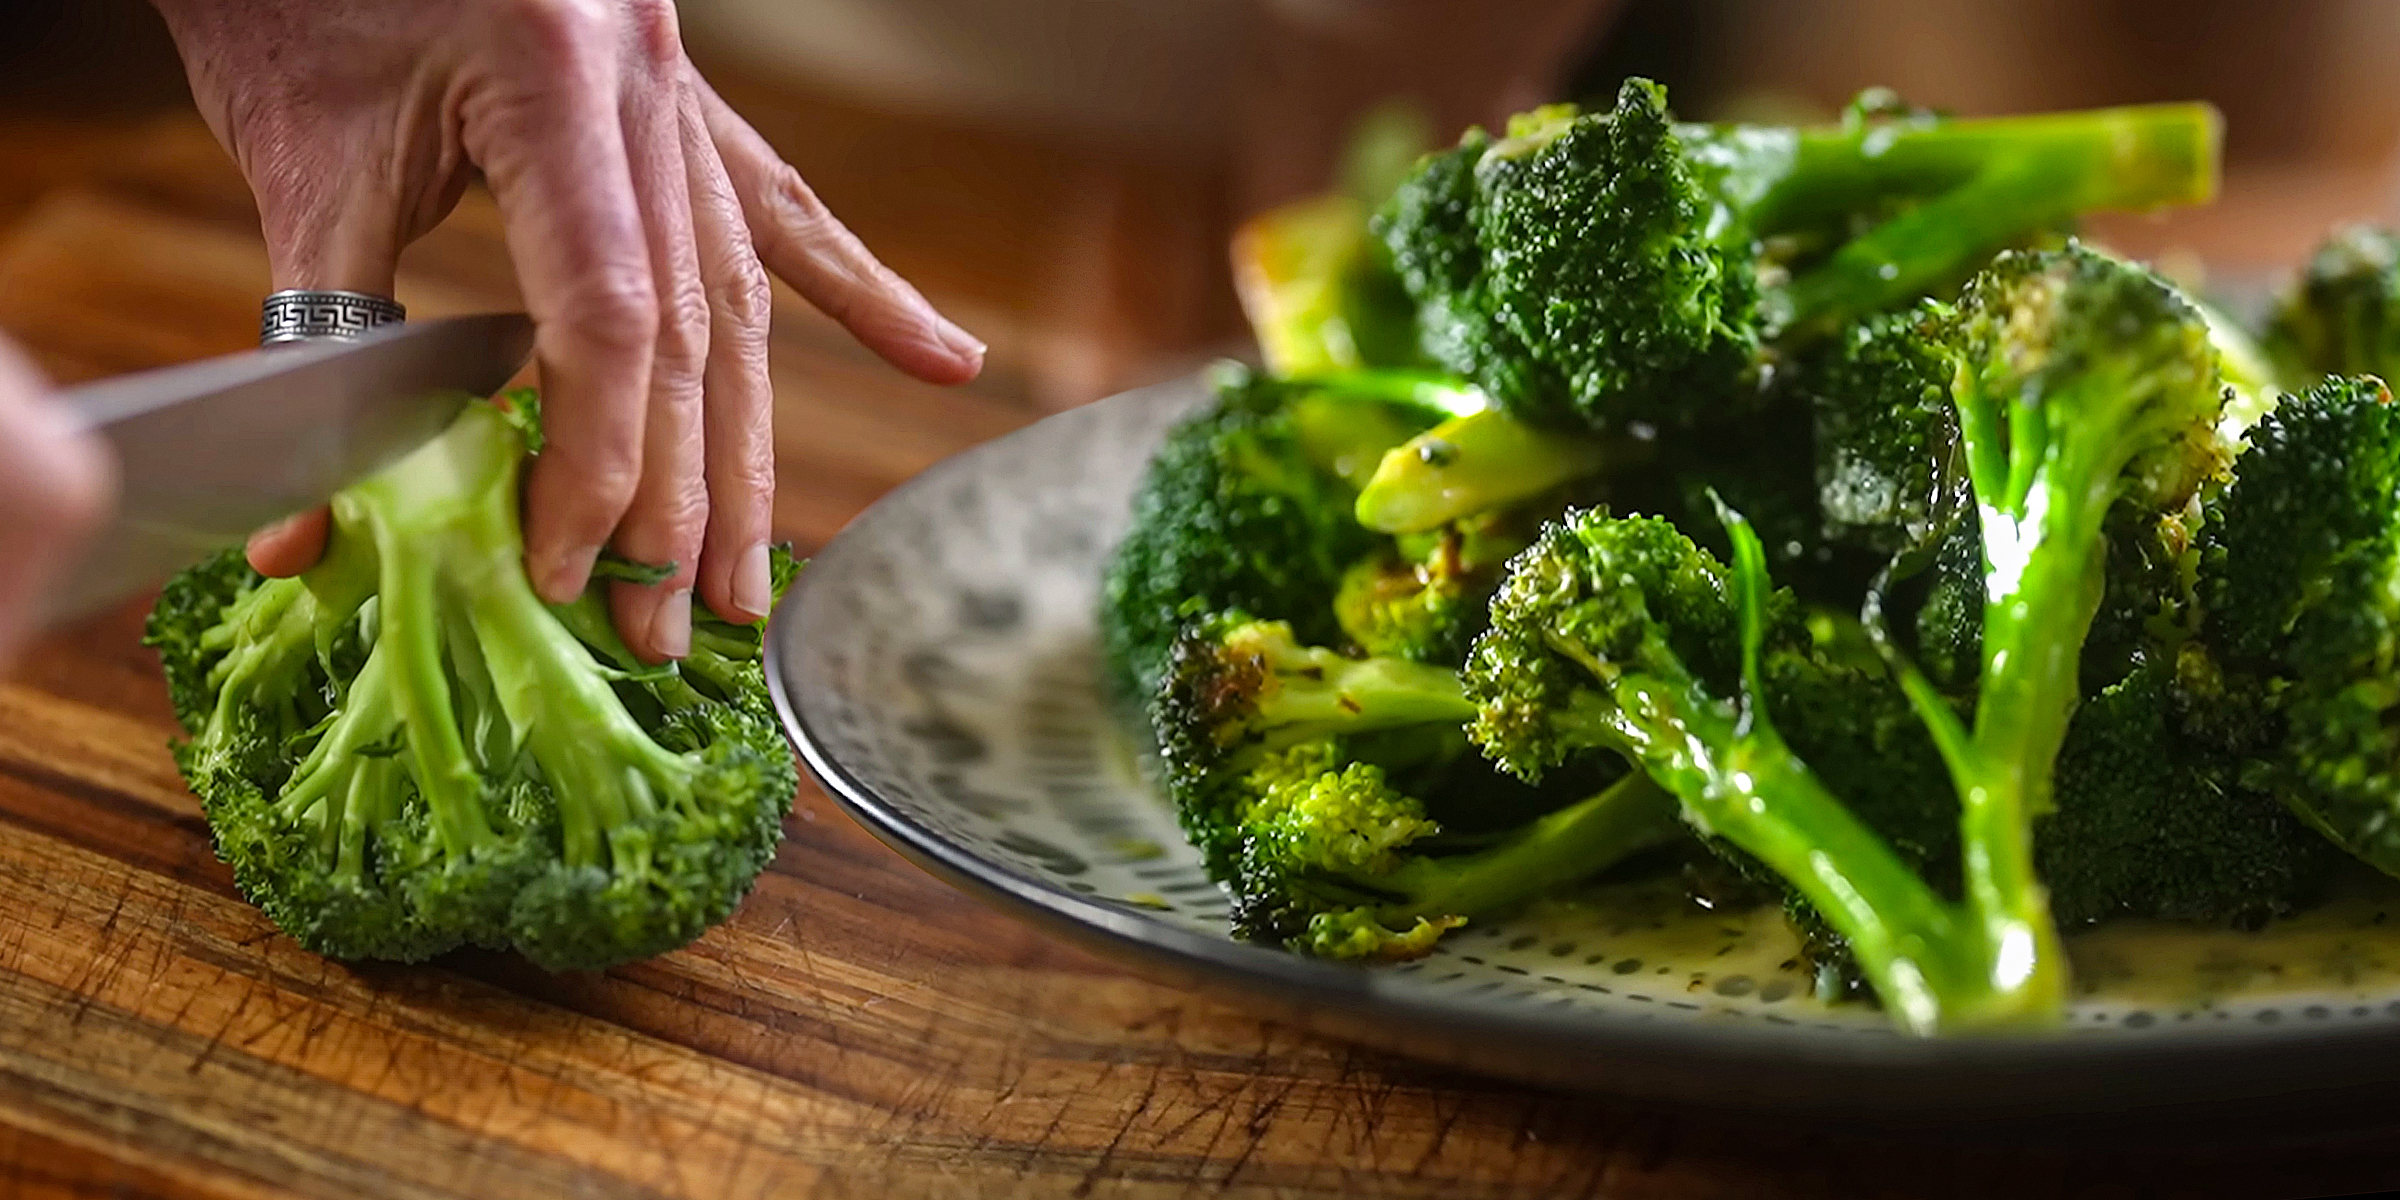 How to Prepare Applebee's Broccoli | Source: Youtube/Recipe30